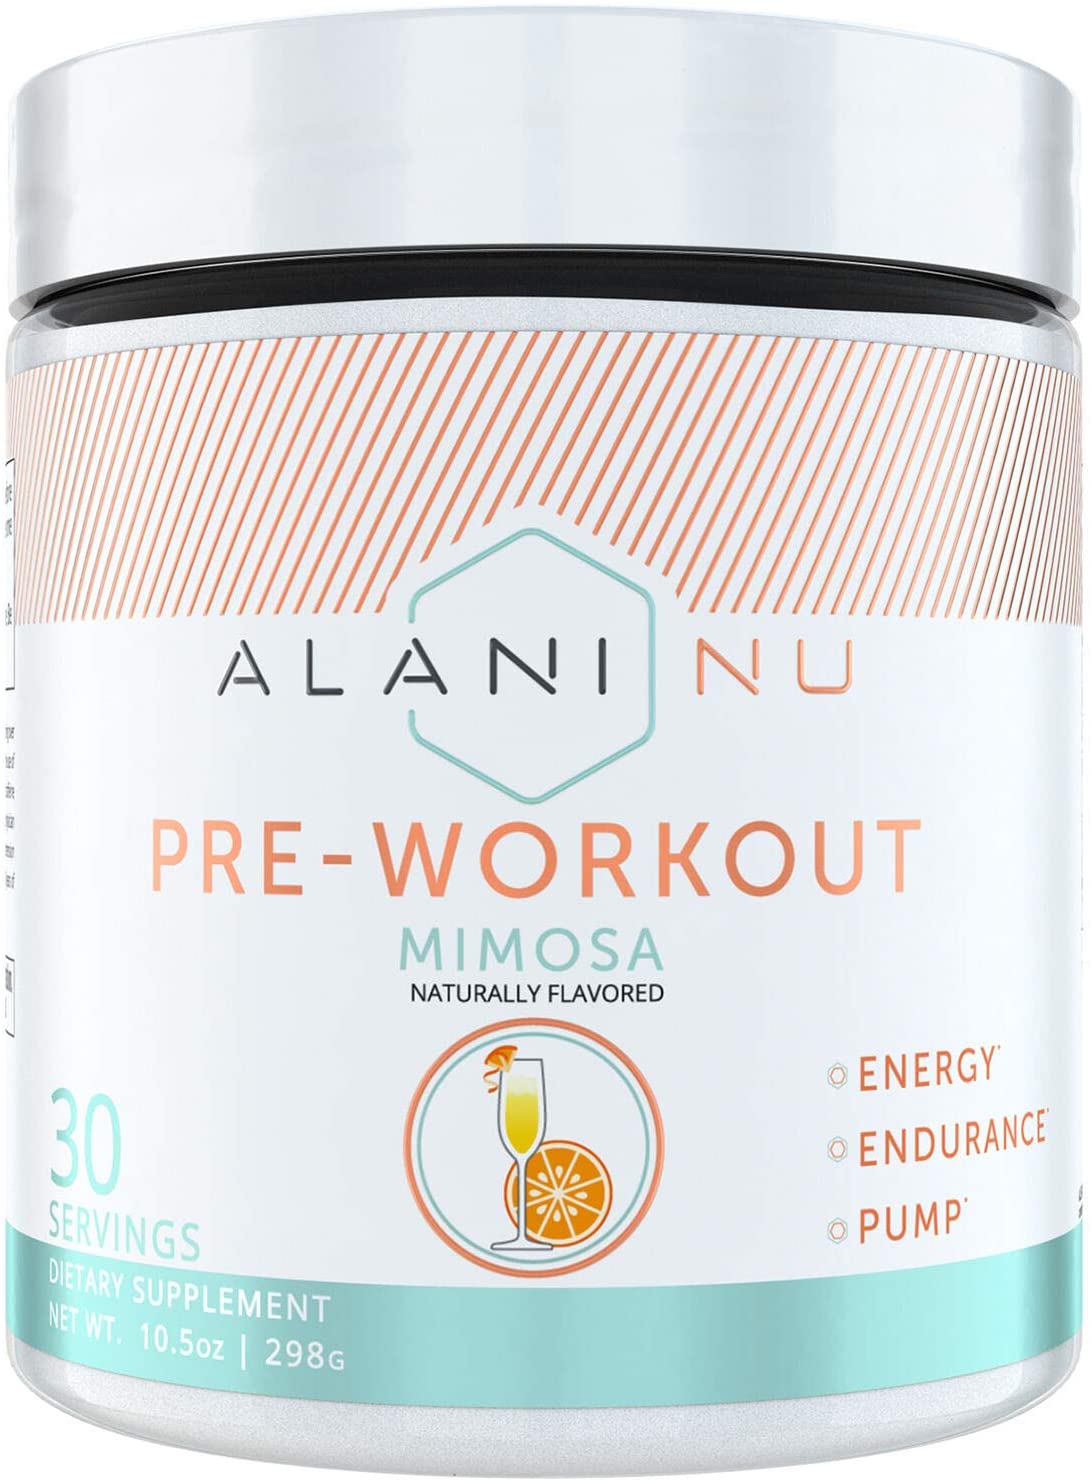 Alani Nu Pre-Workout 300g / Mimosa